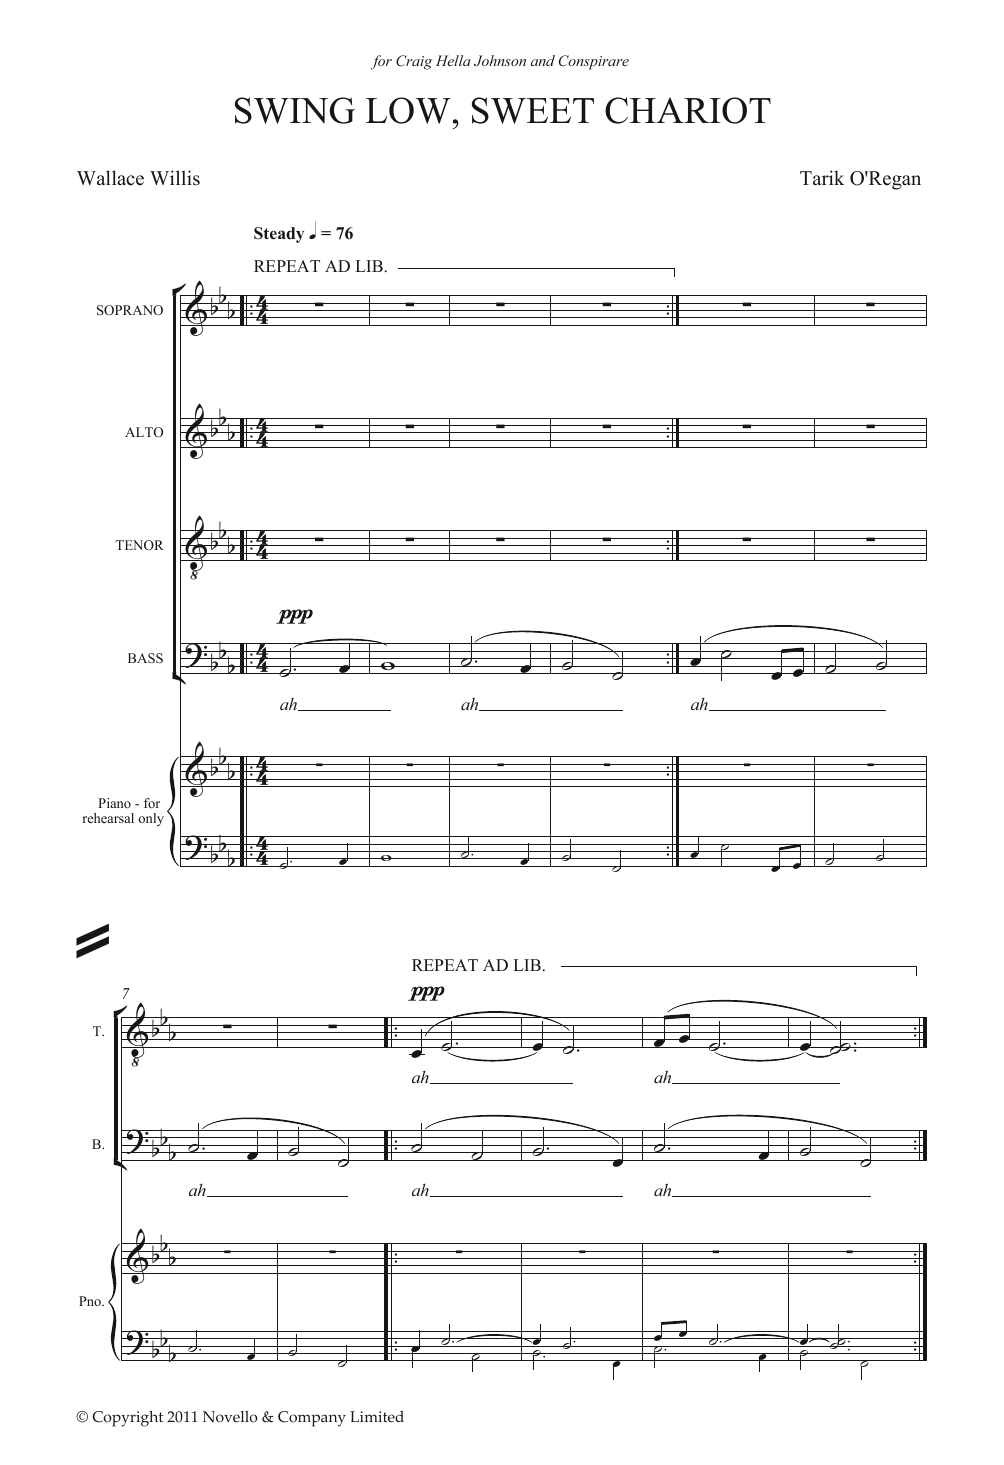 Tarik O'Regan Swing Low, Sweet Chariot Sheet Music Notes & Chords for SATB Choir - Download or Print PDF